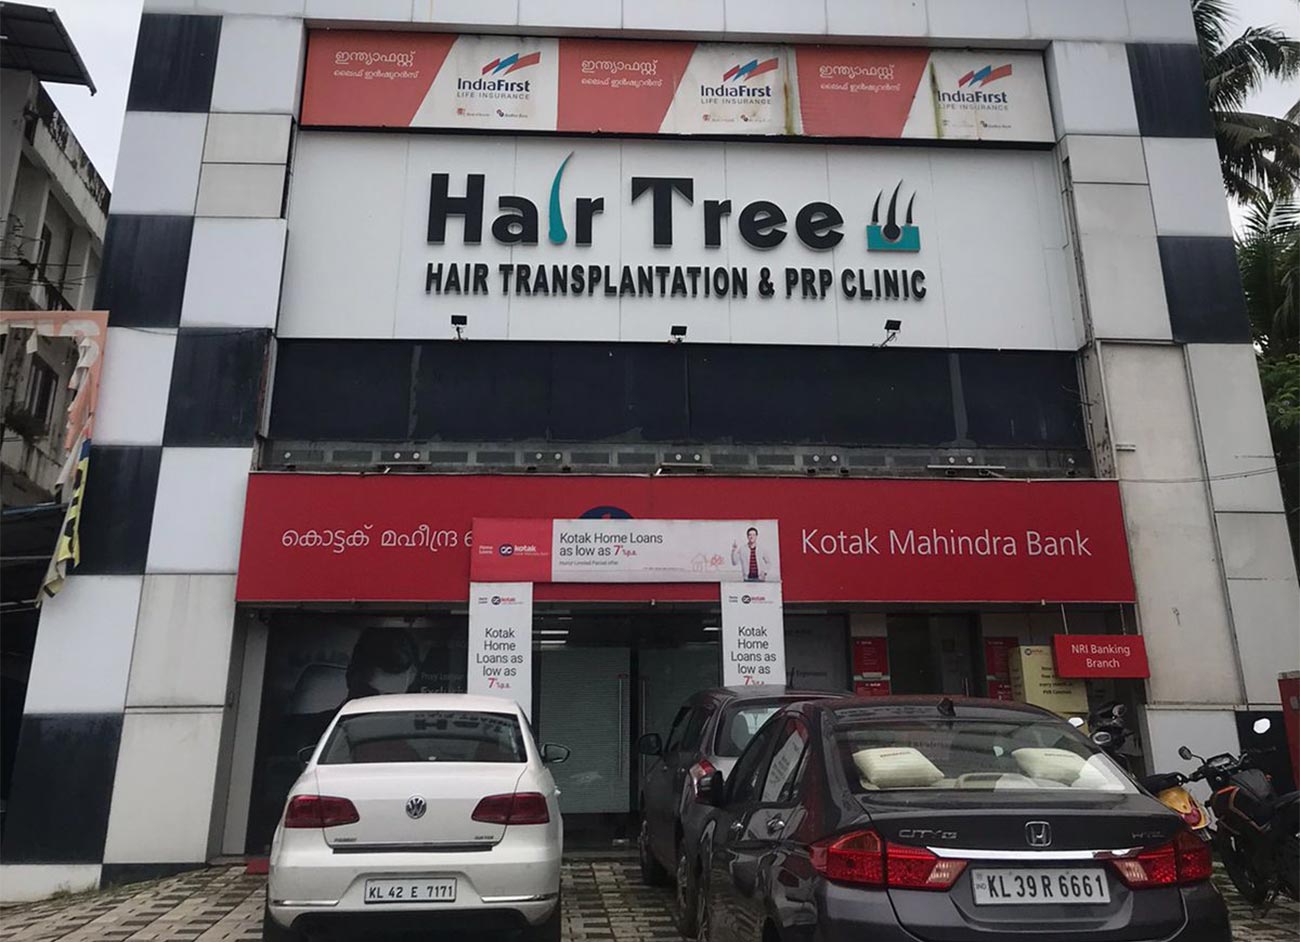 Hair Loss Treatment & Transplant Clinic in Kochi - Trustworthy Results